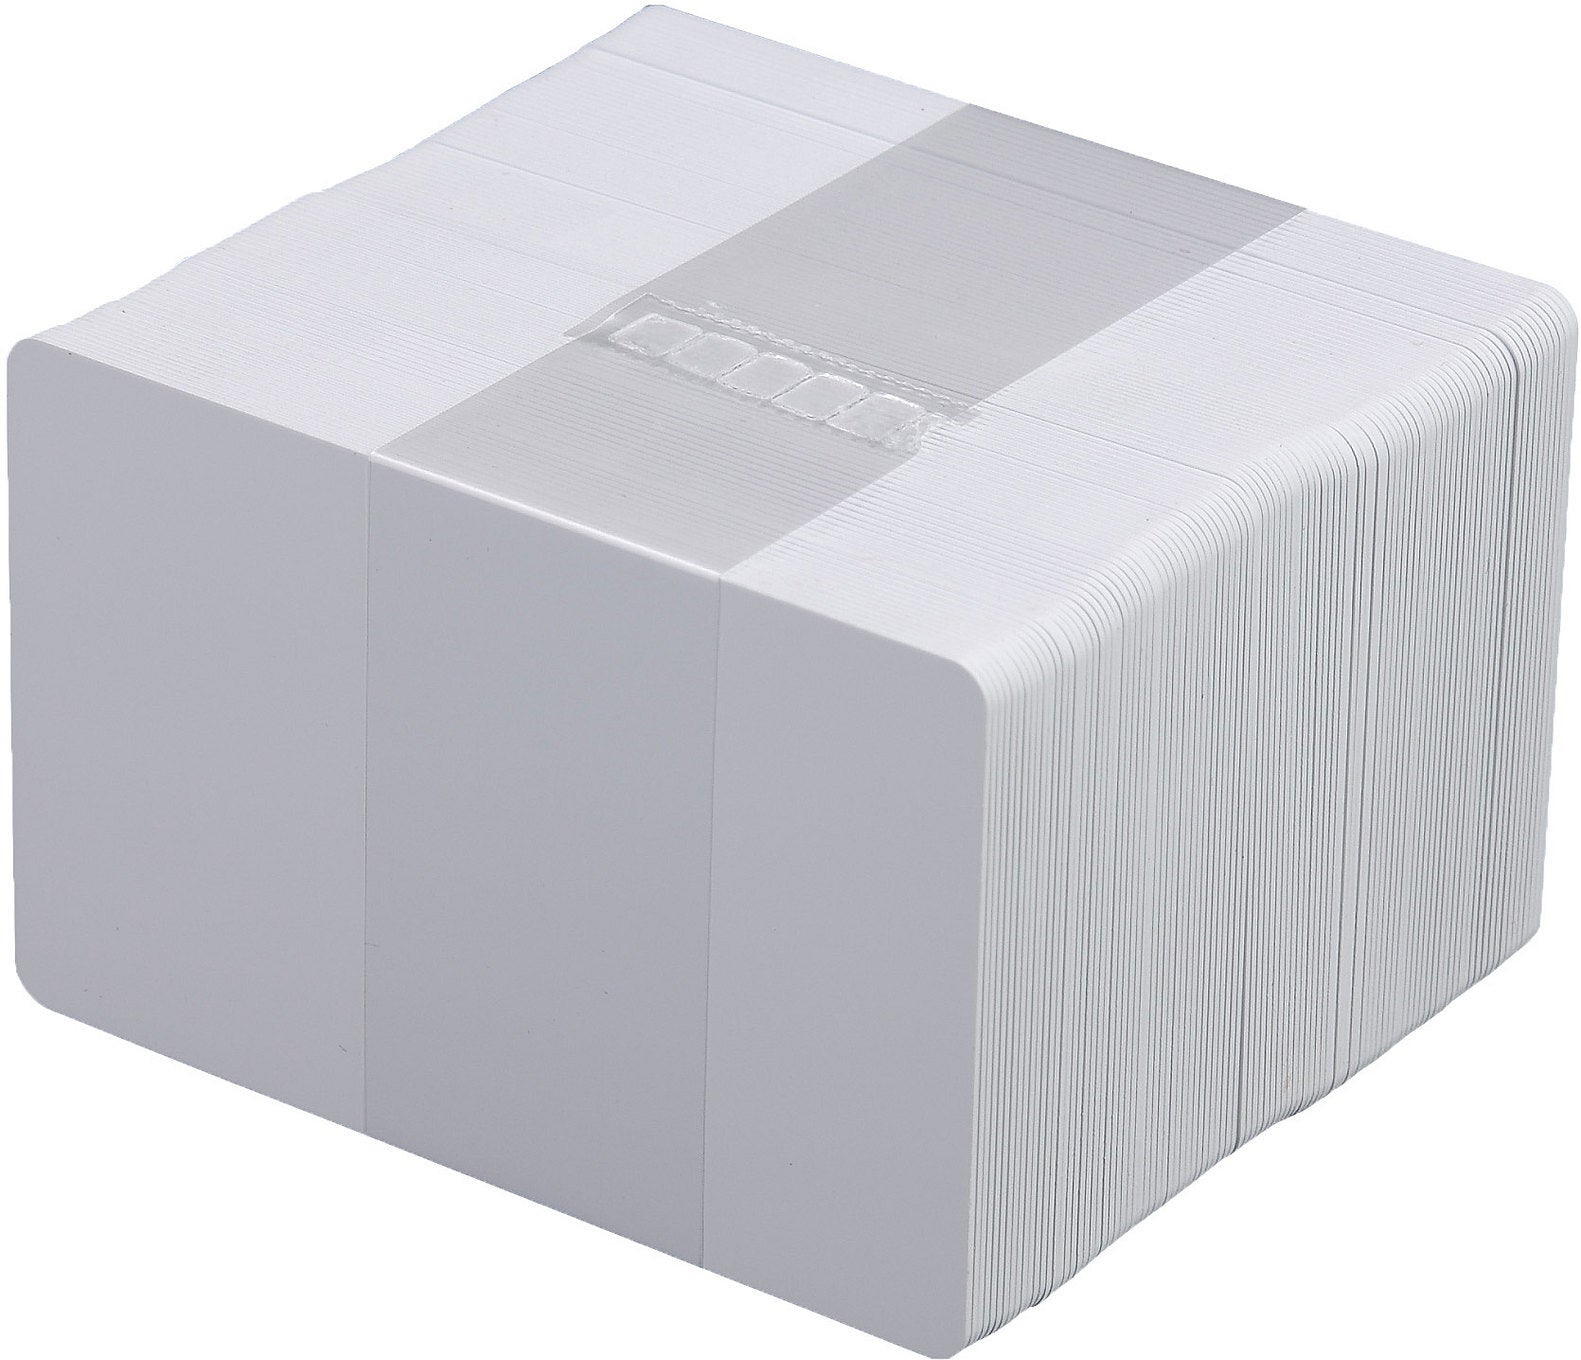 Blank White PVC Plastic ID Cards 760 micron | SPLIT PACKS - 1000